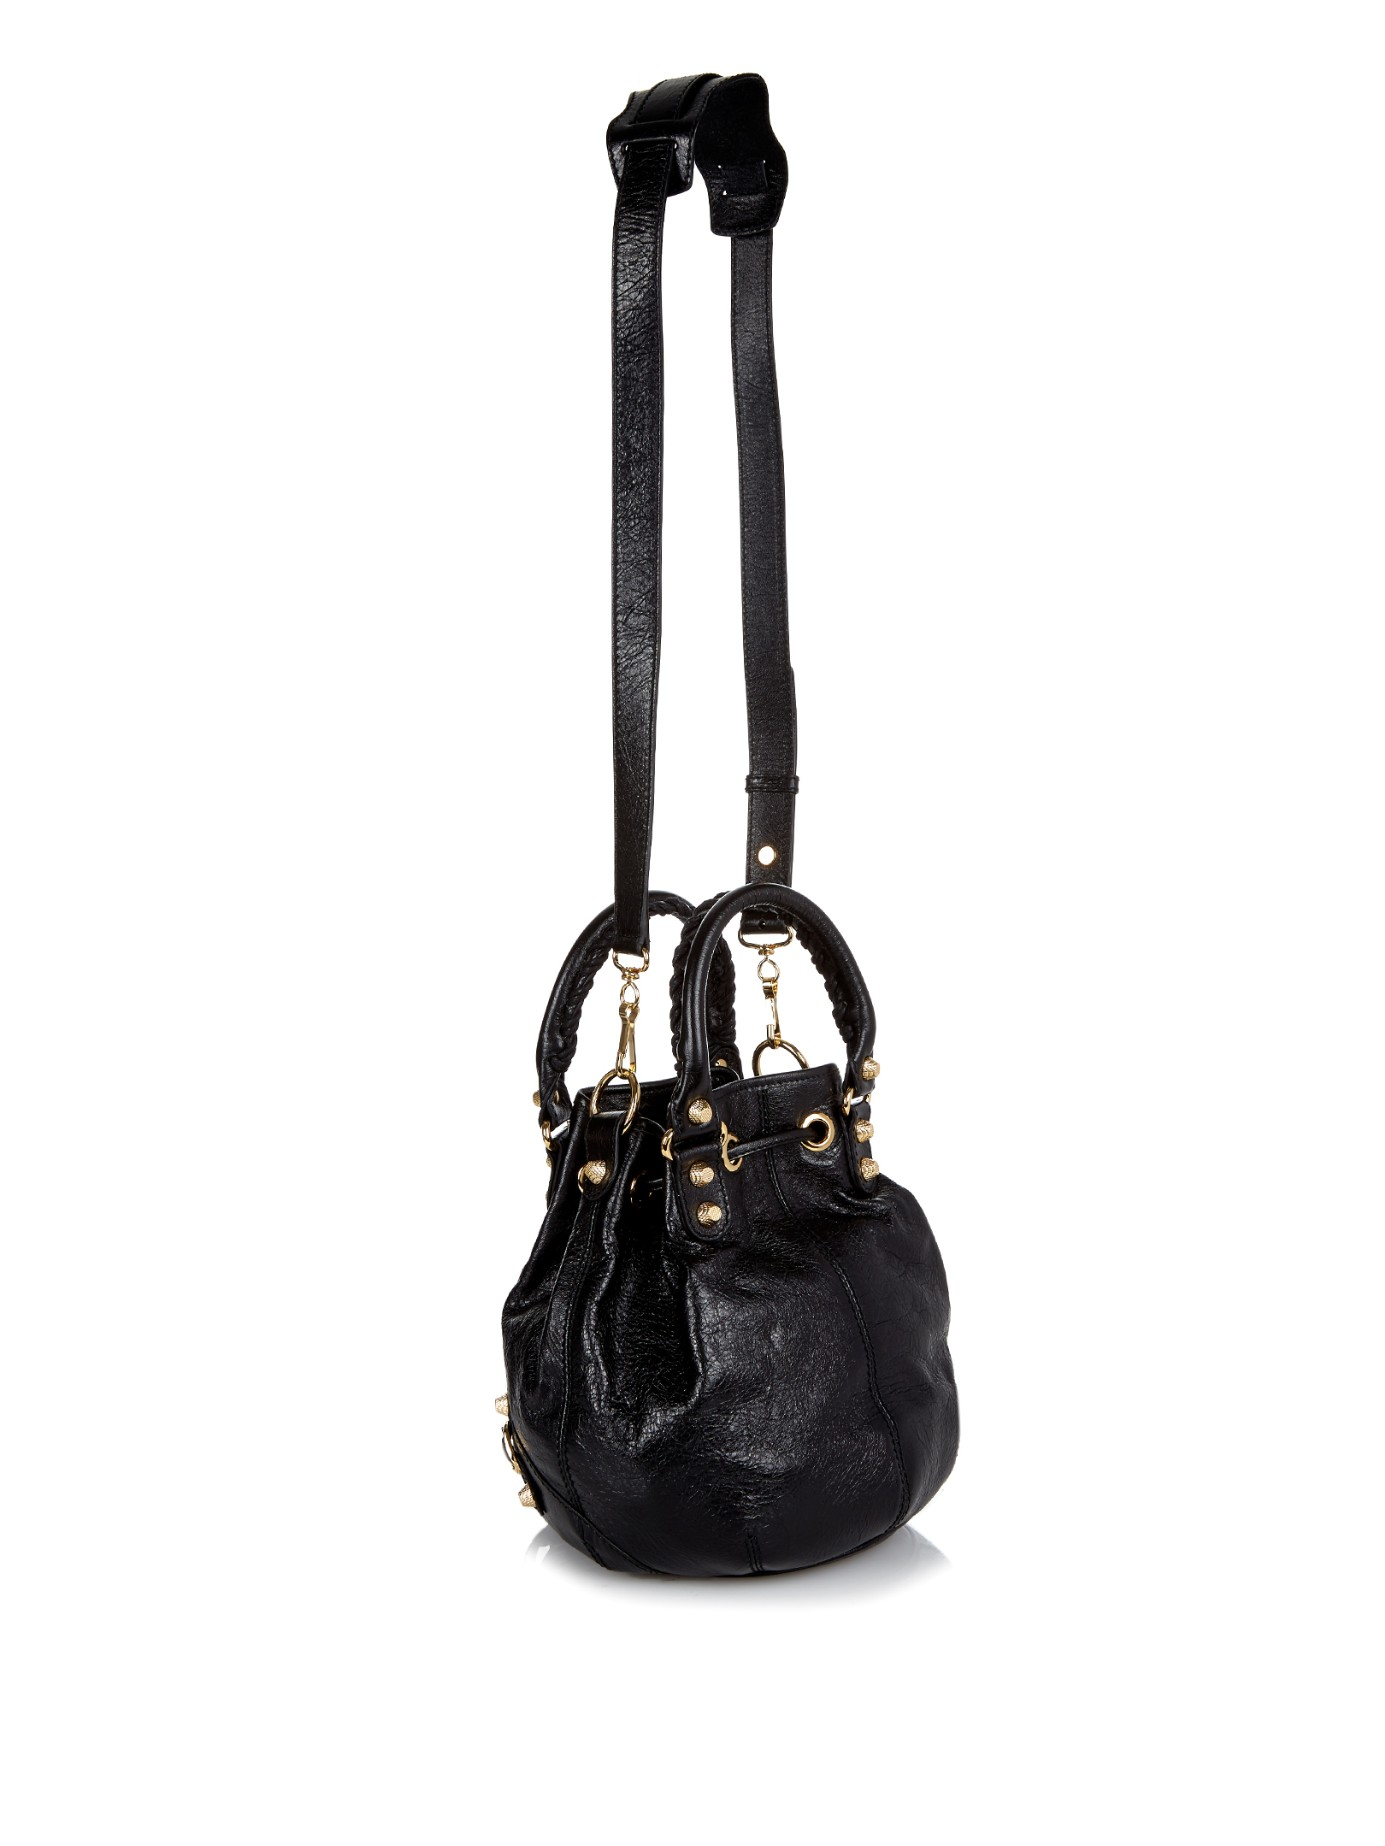 Balenciaga Giant Pom-Pom Leather Bucket Bag in Black | Lyst